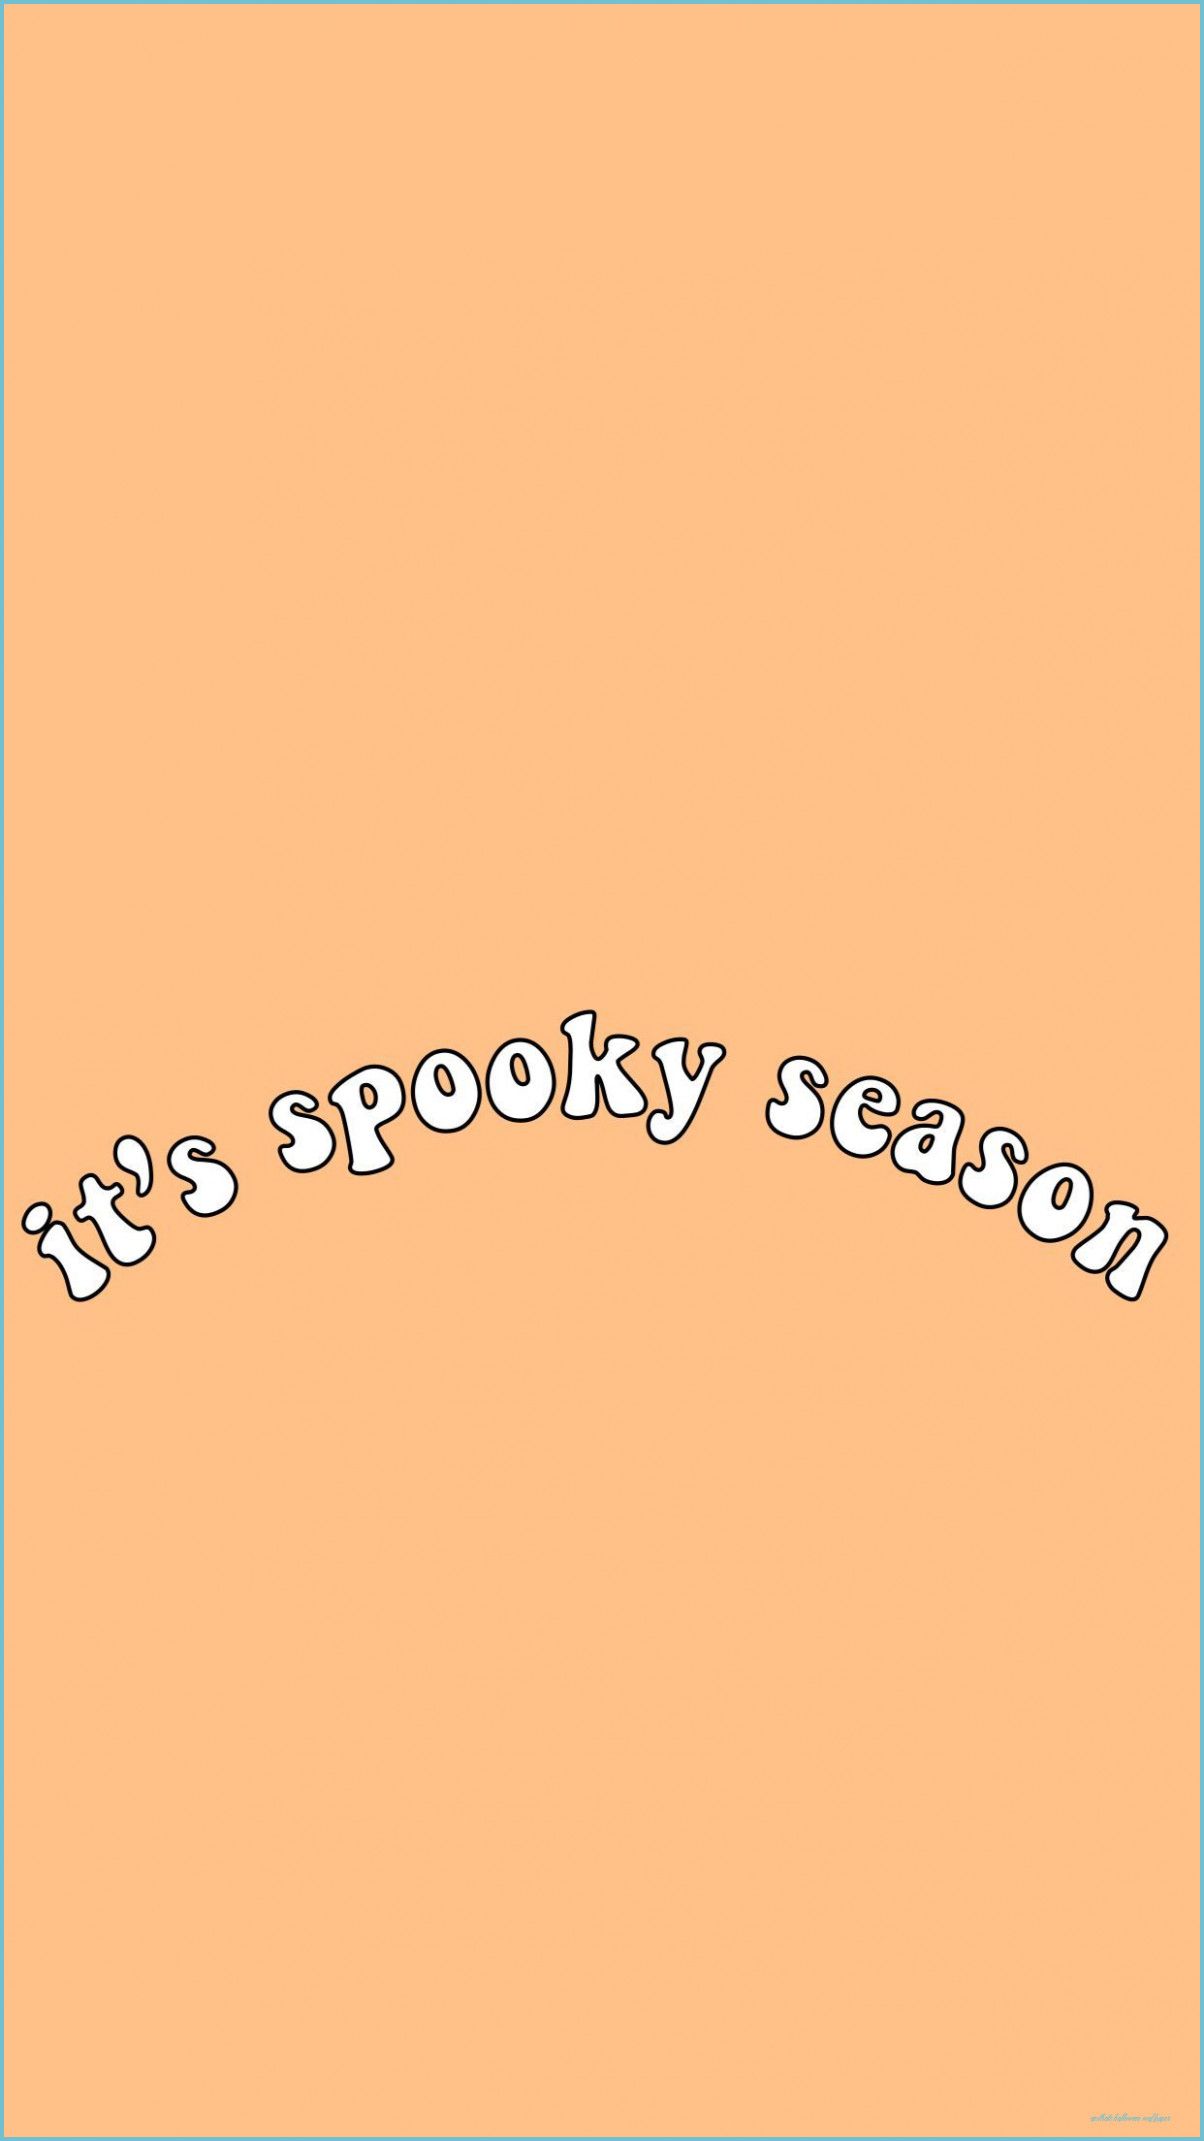 Its spooky season phone wallpaper - Cute Halloween